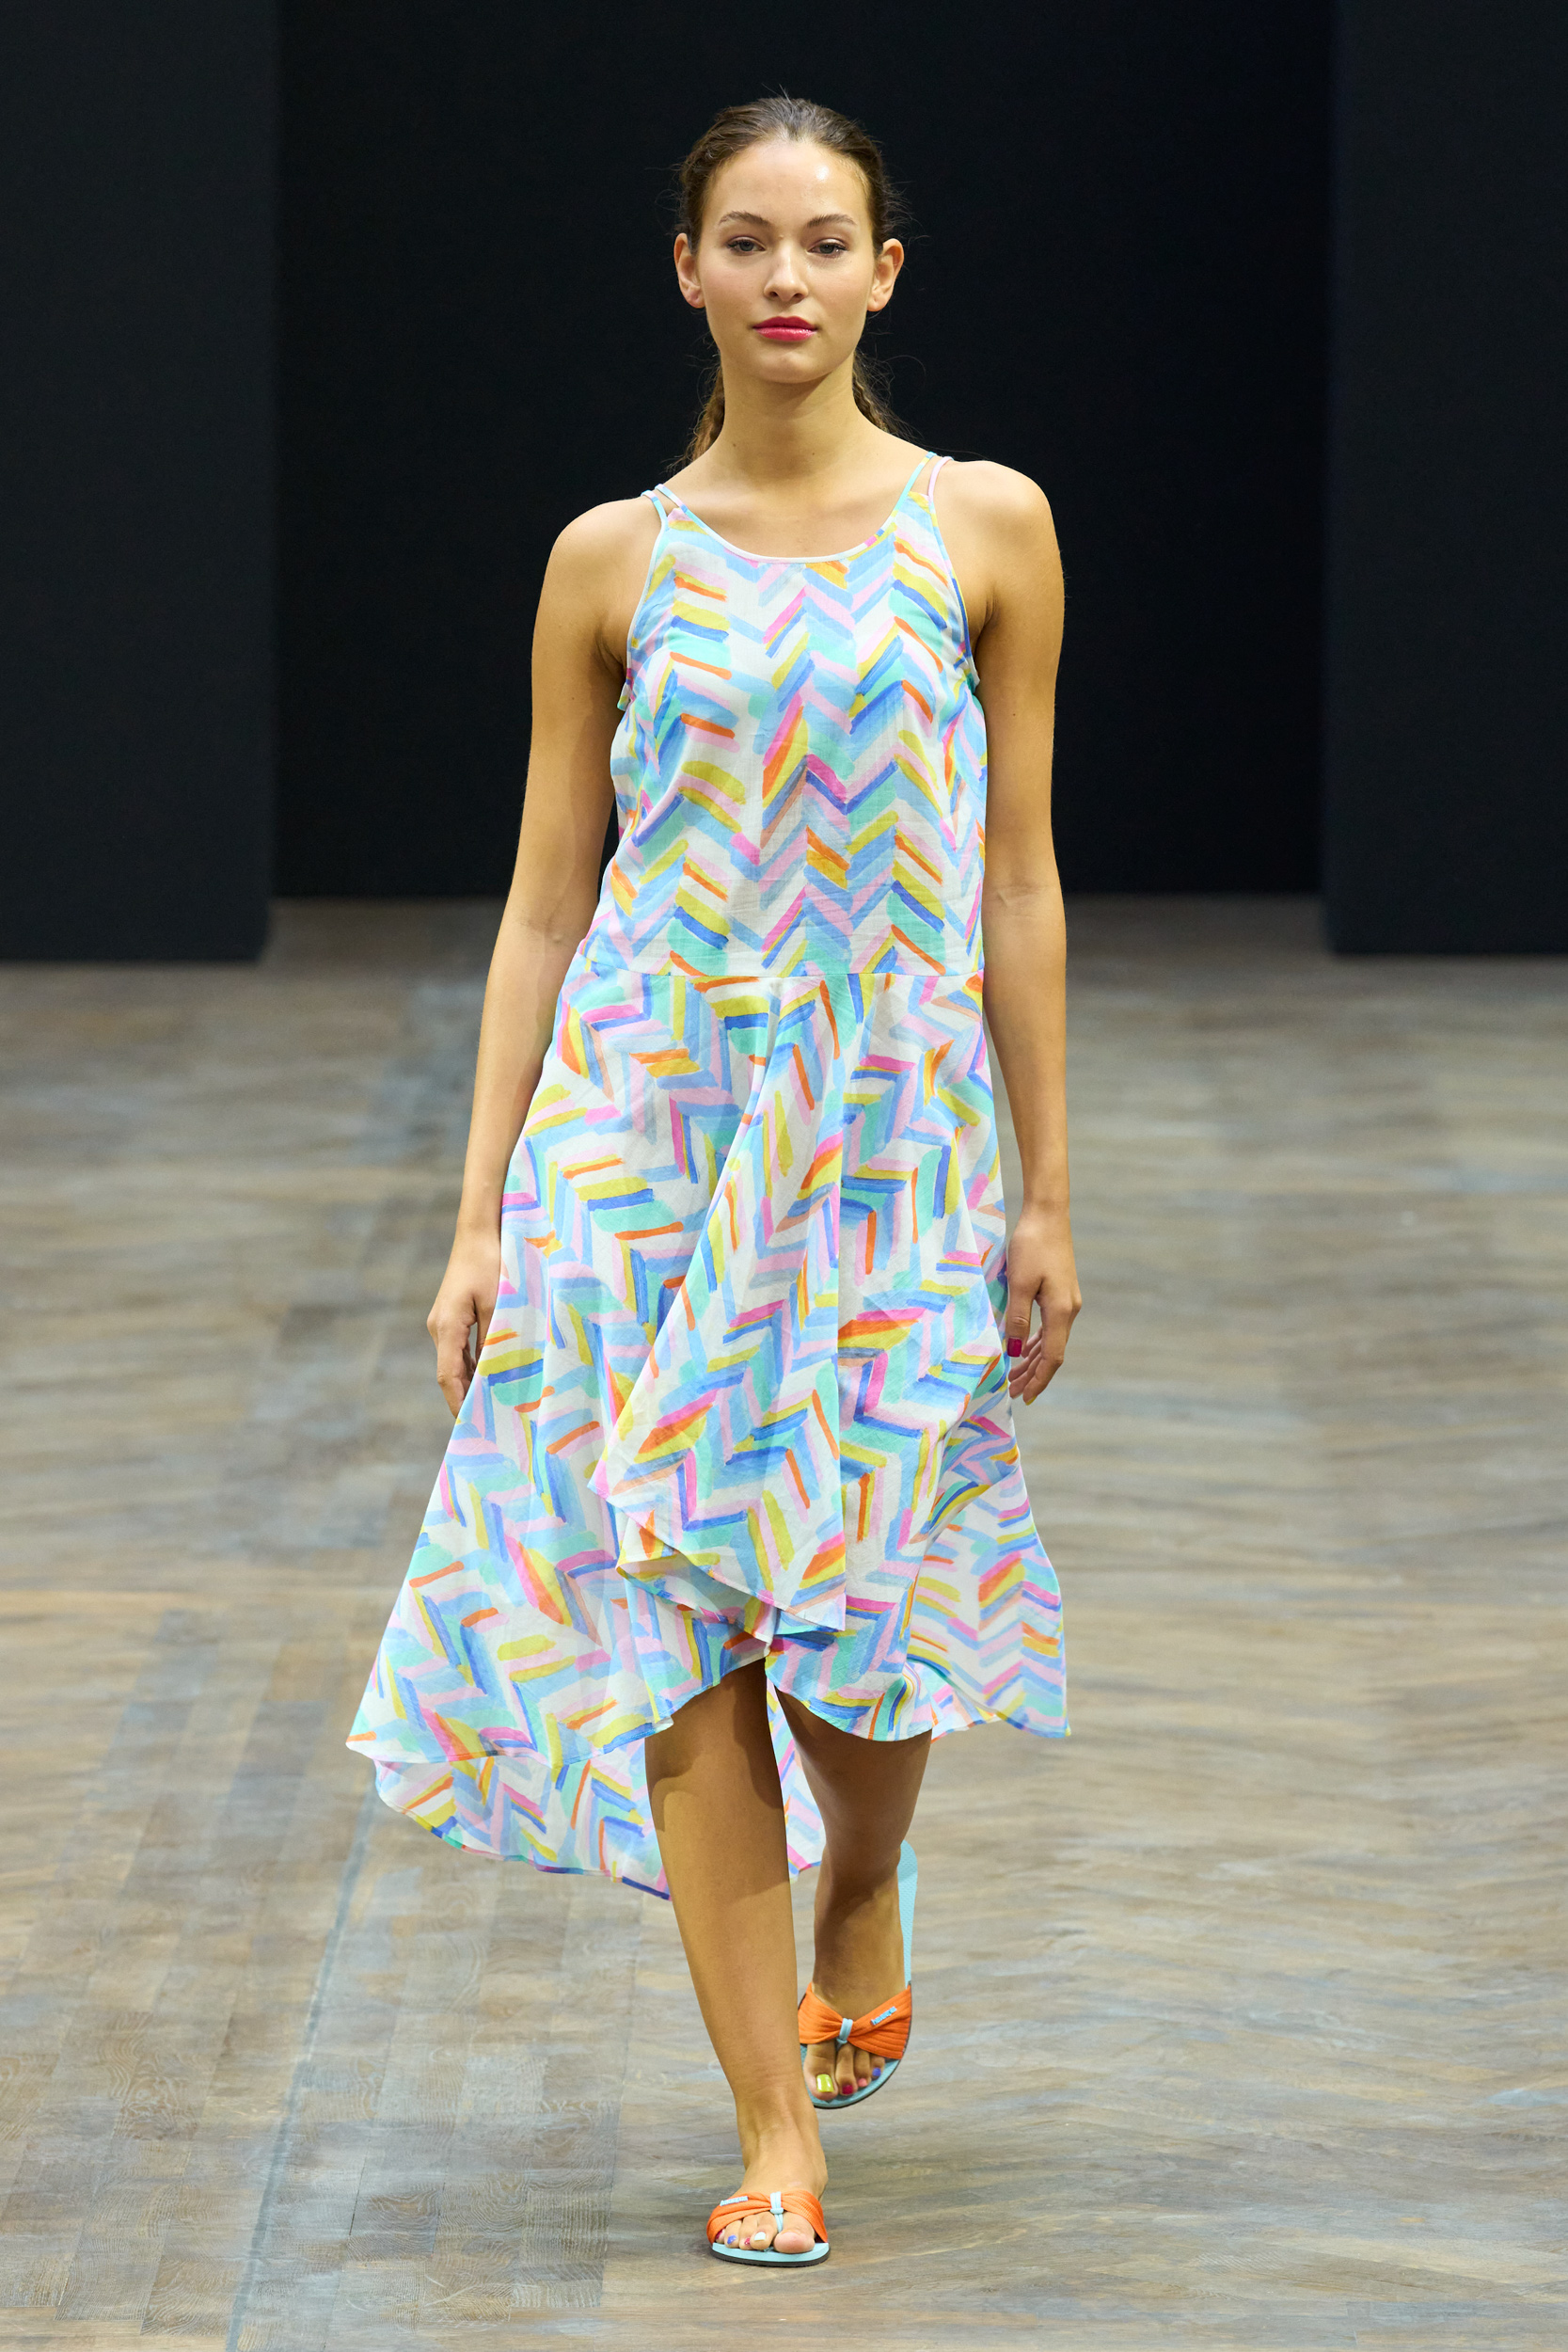 Malune By Frida Weyer Spring 2023 Fashion Show | The Impression